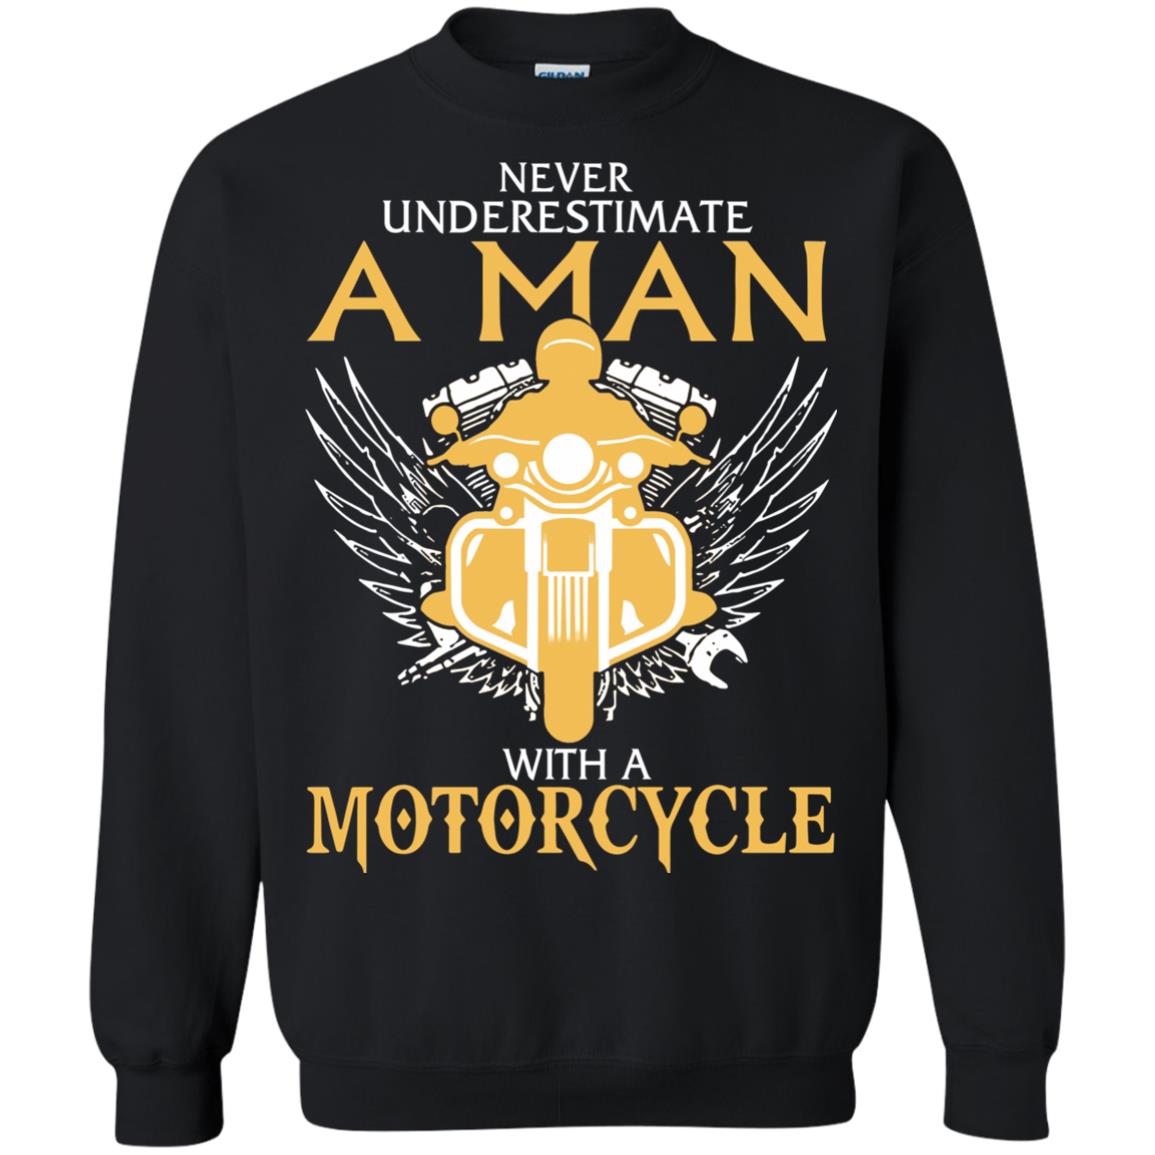 Man With A Motorcycle sweatshirt - black